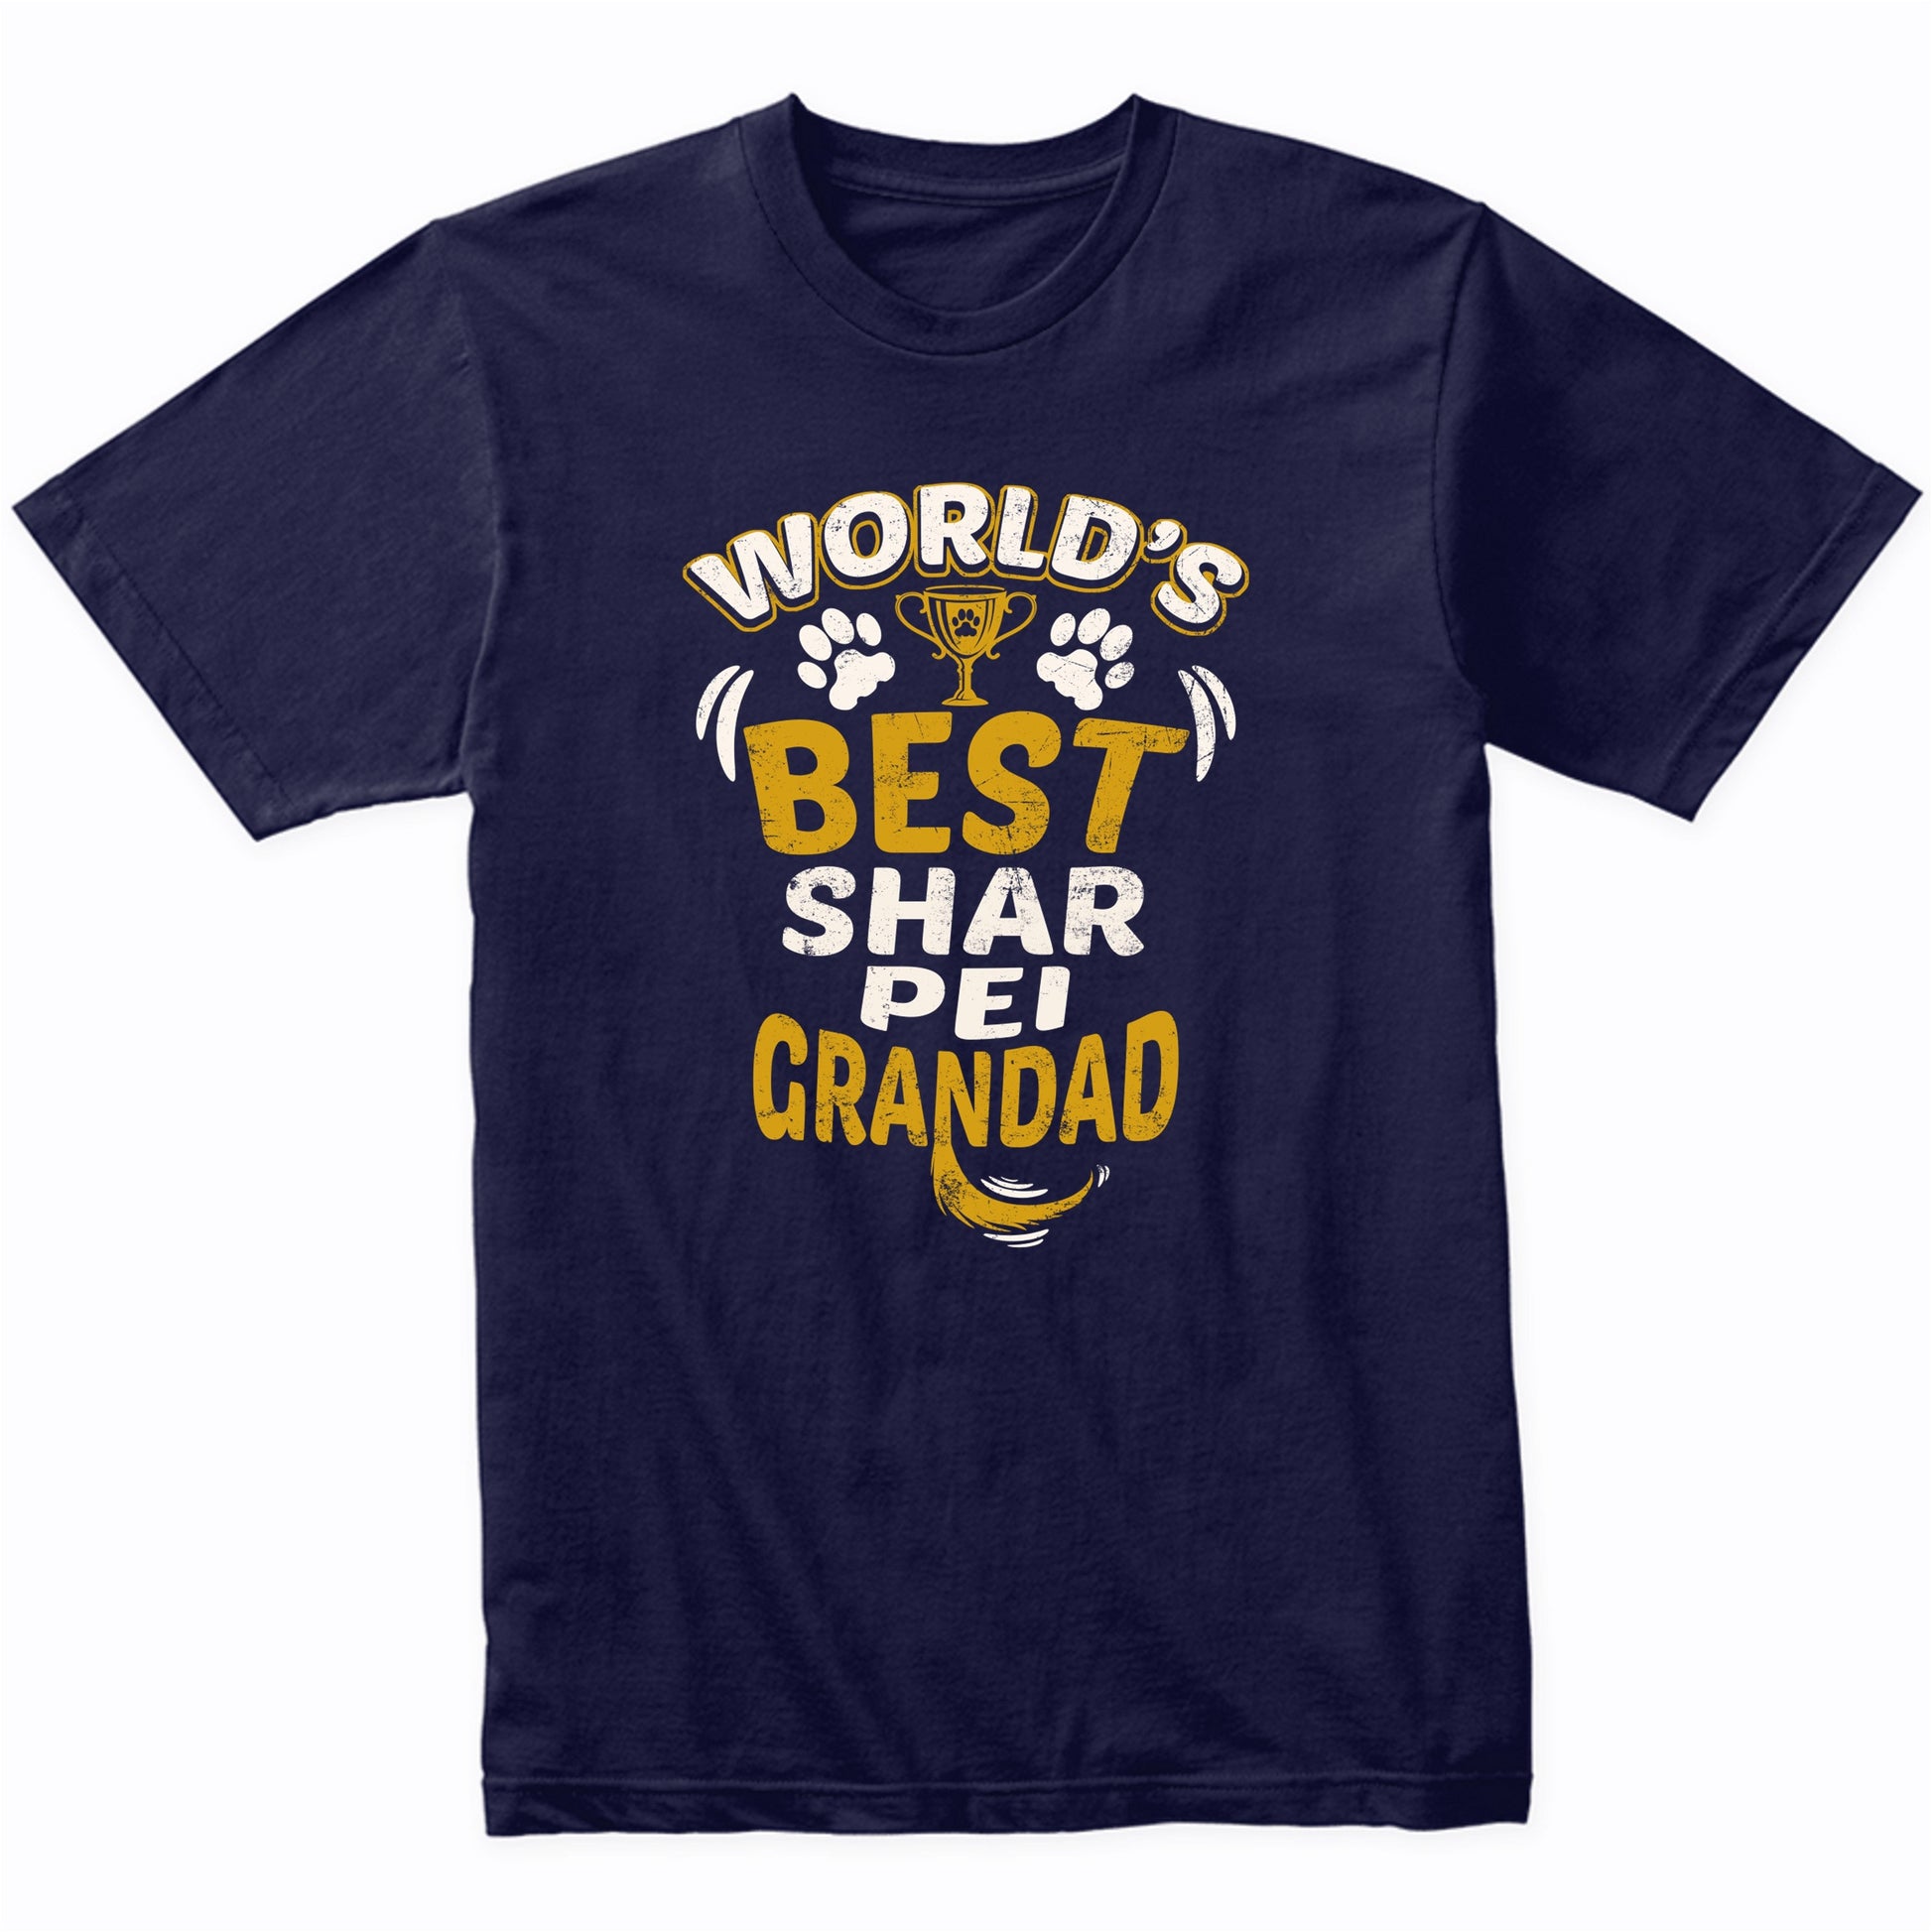 World's Best Shar Pei Grandad Graphic T-Shirt